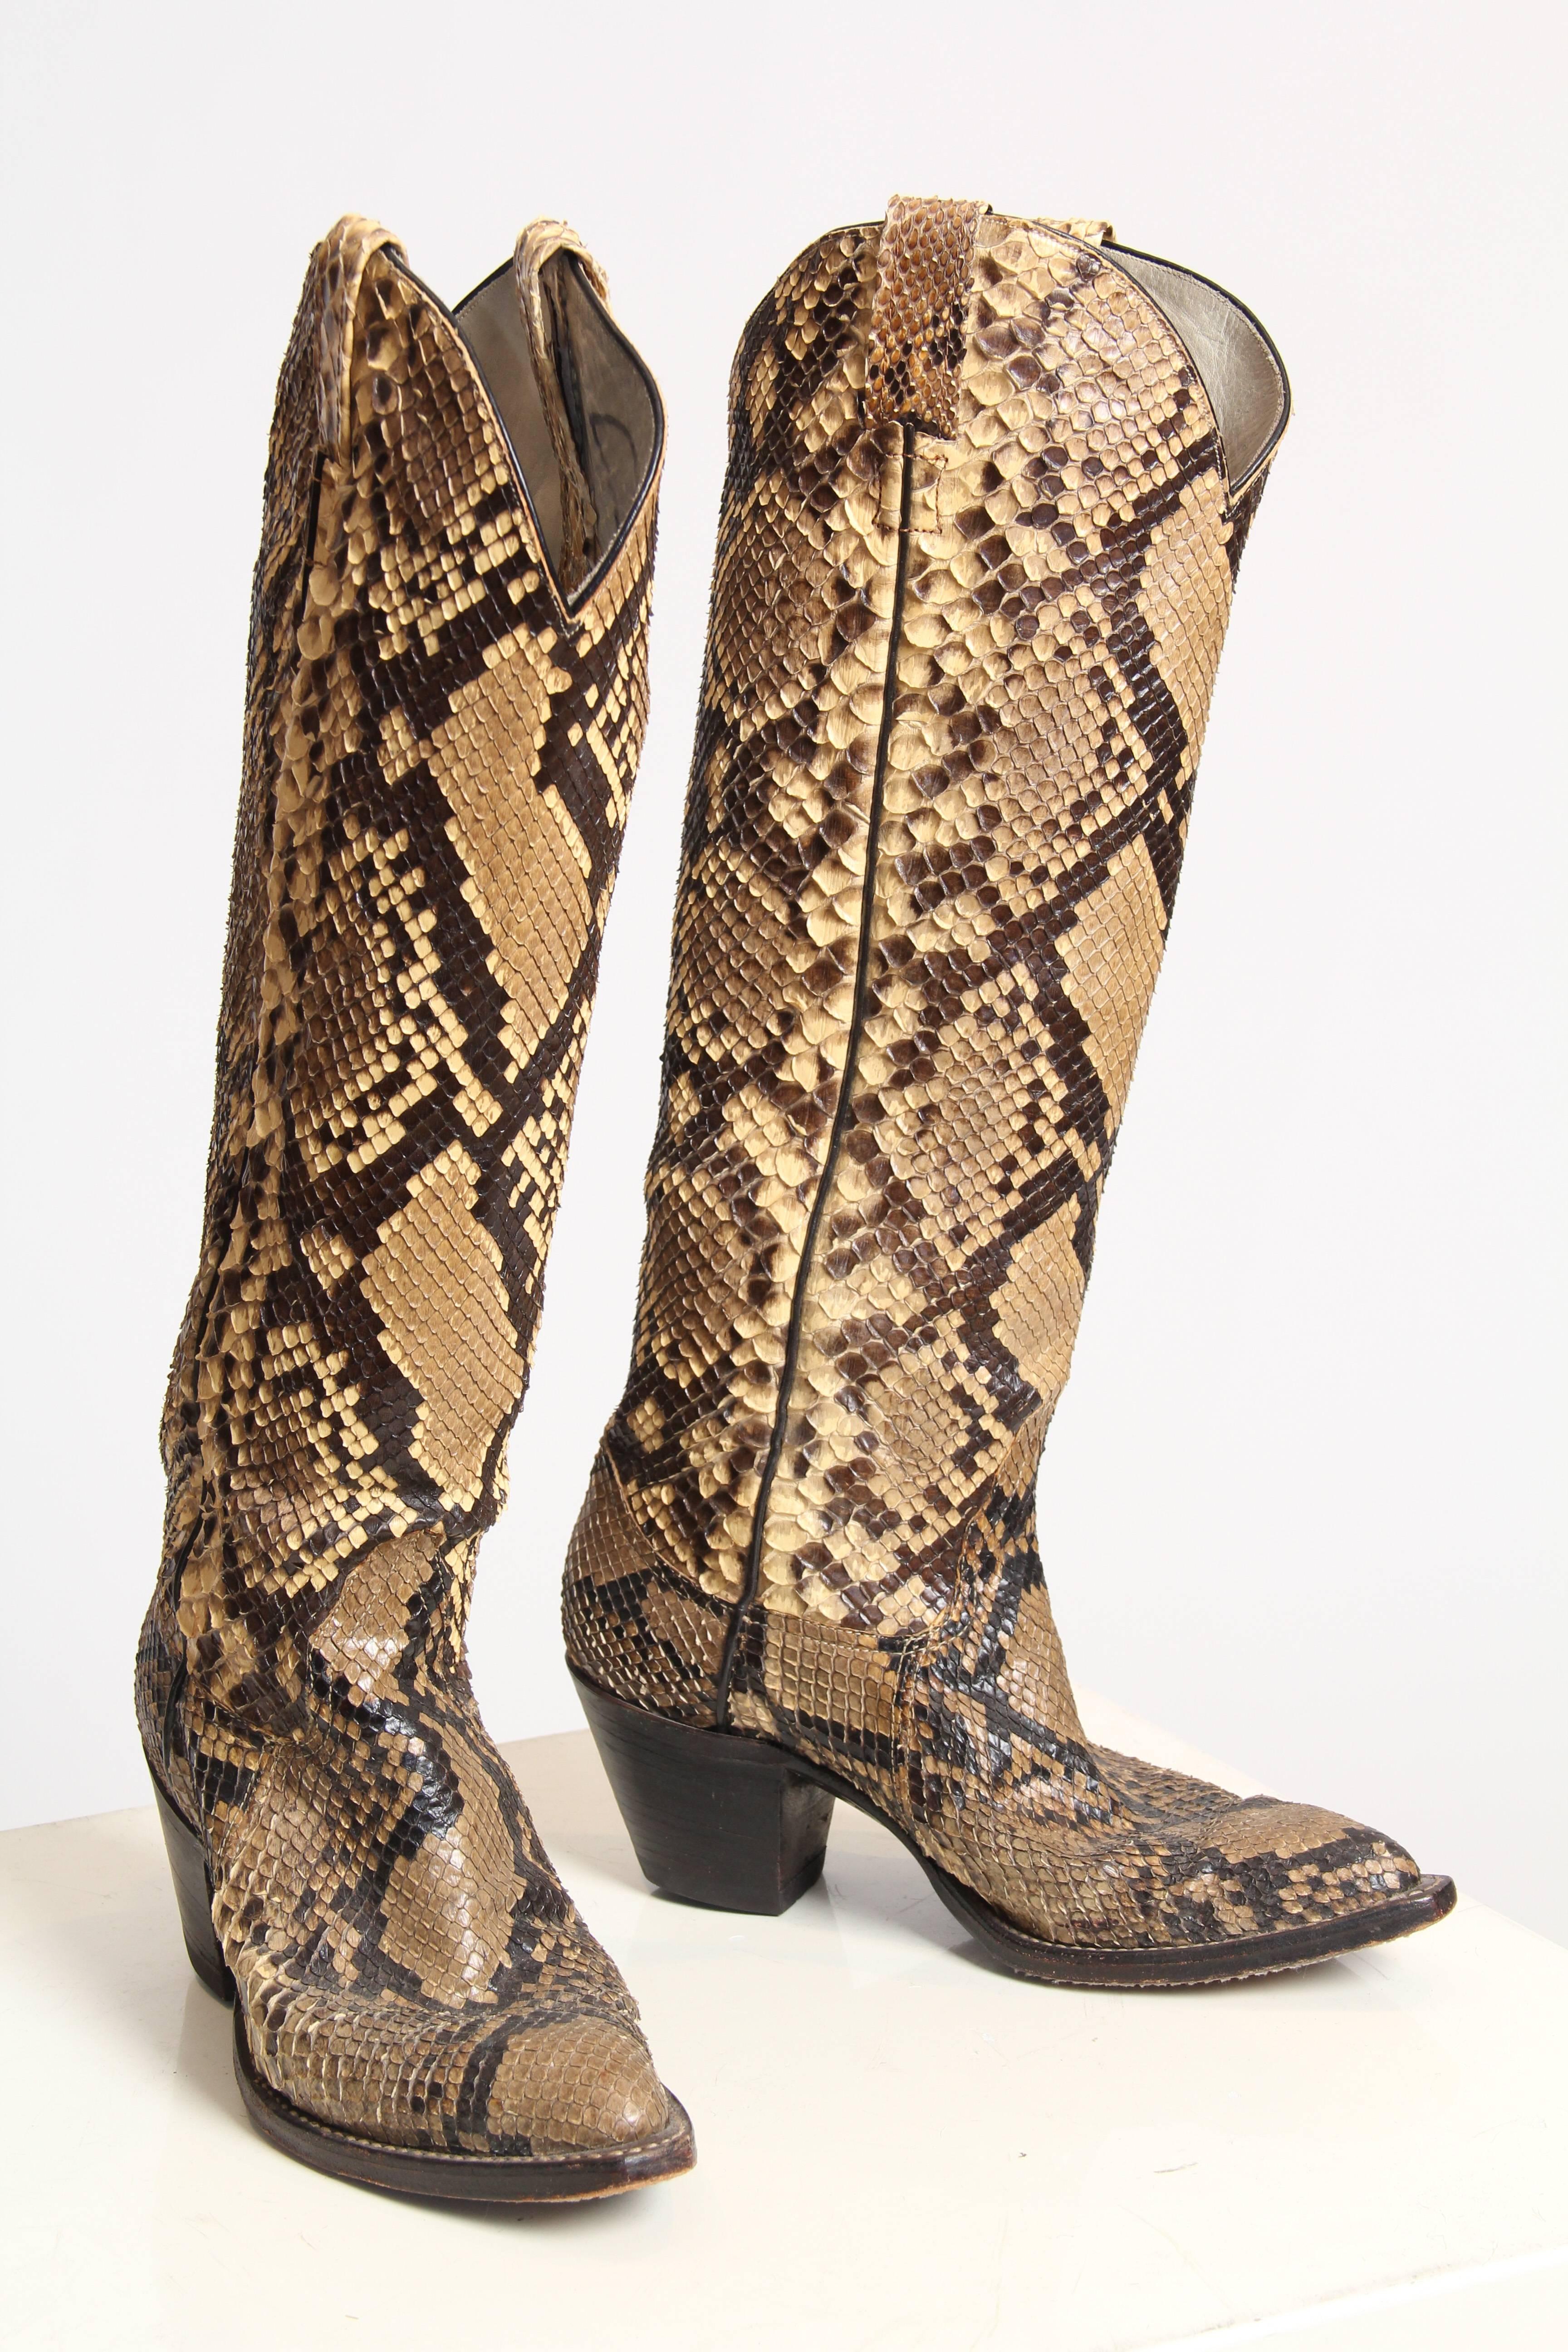 larry mahan snakeskin boots